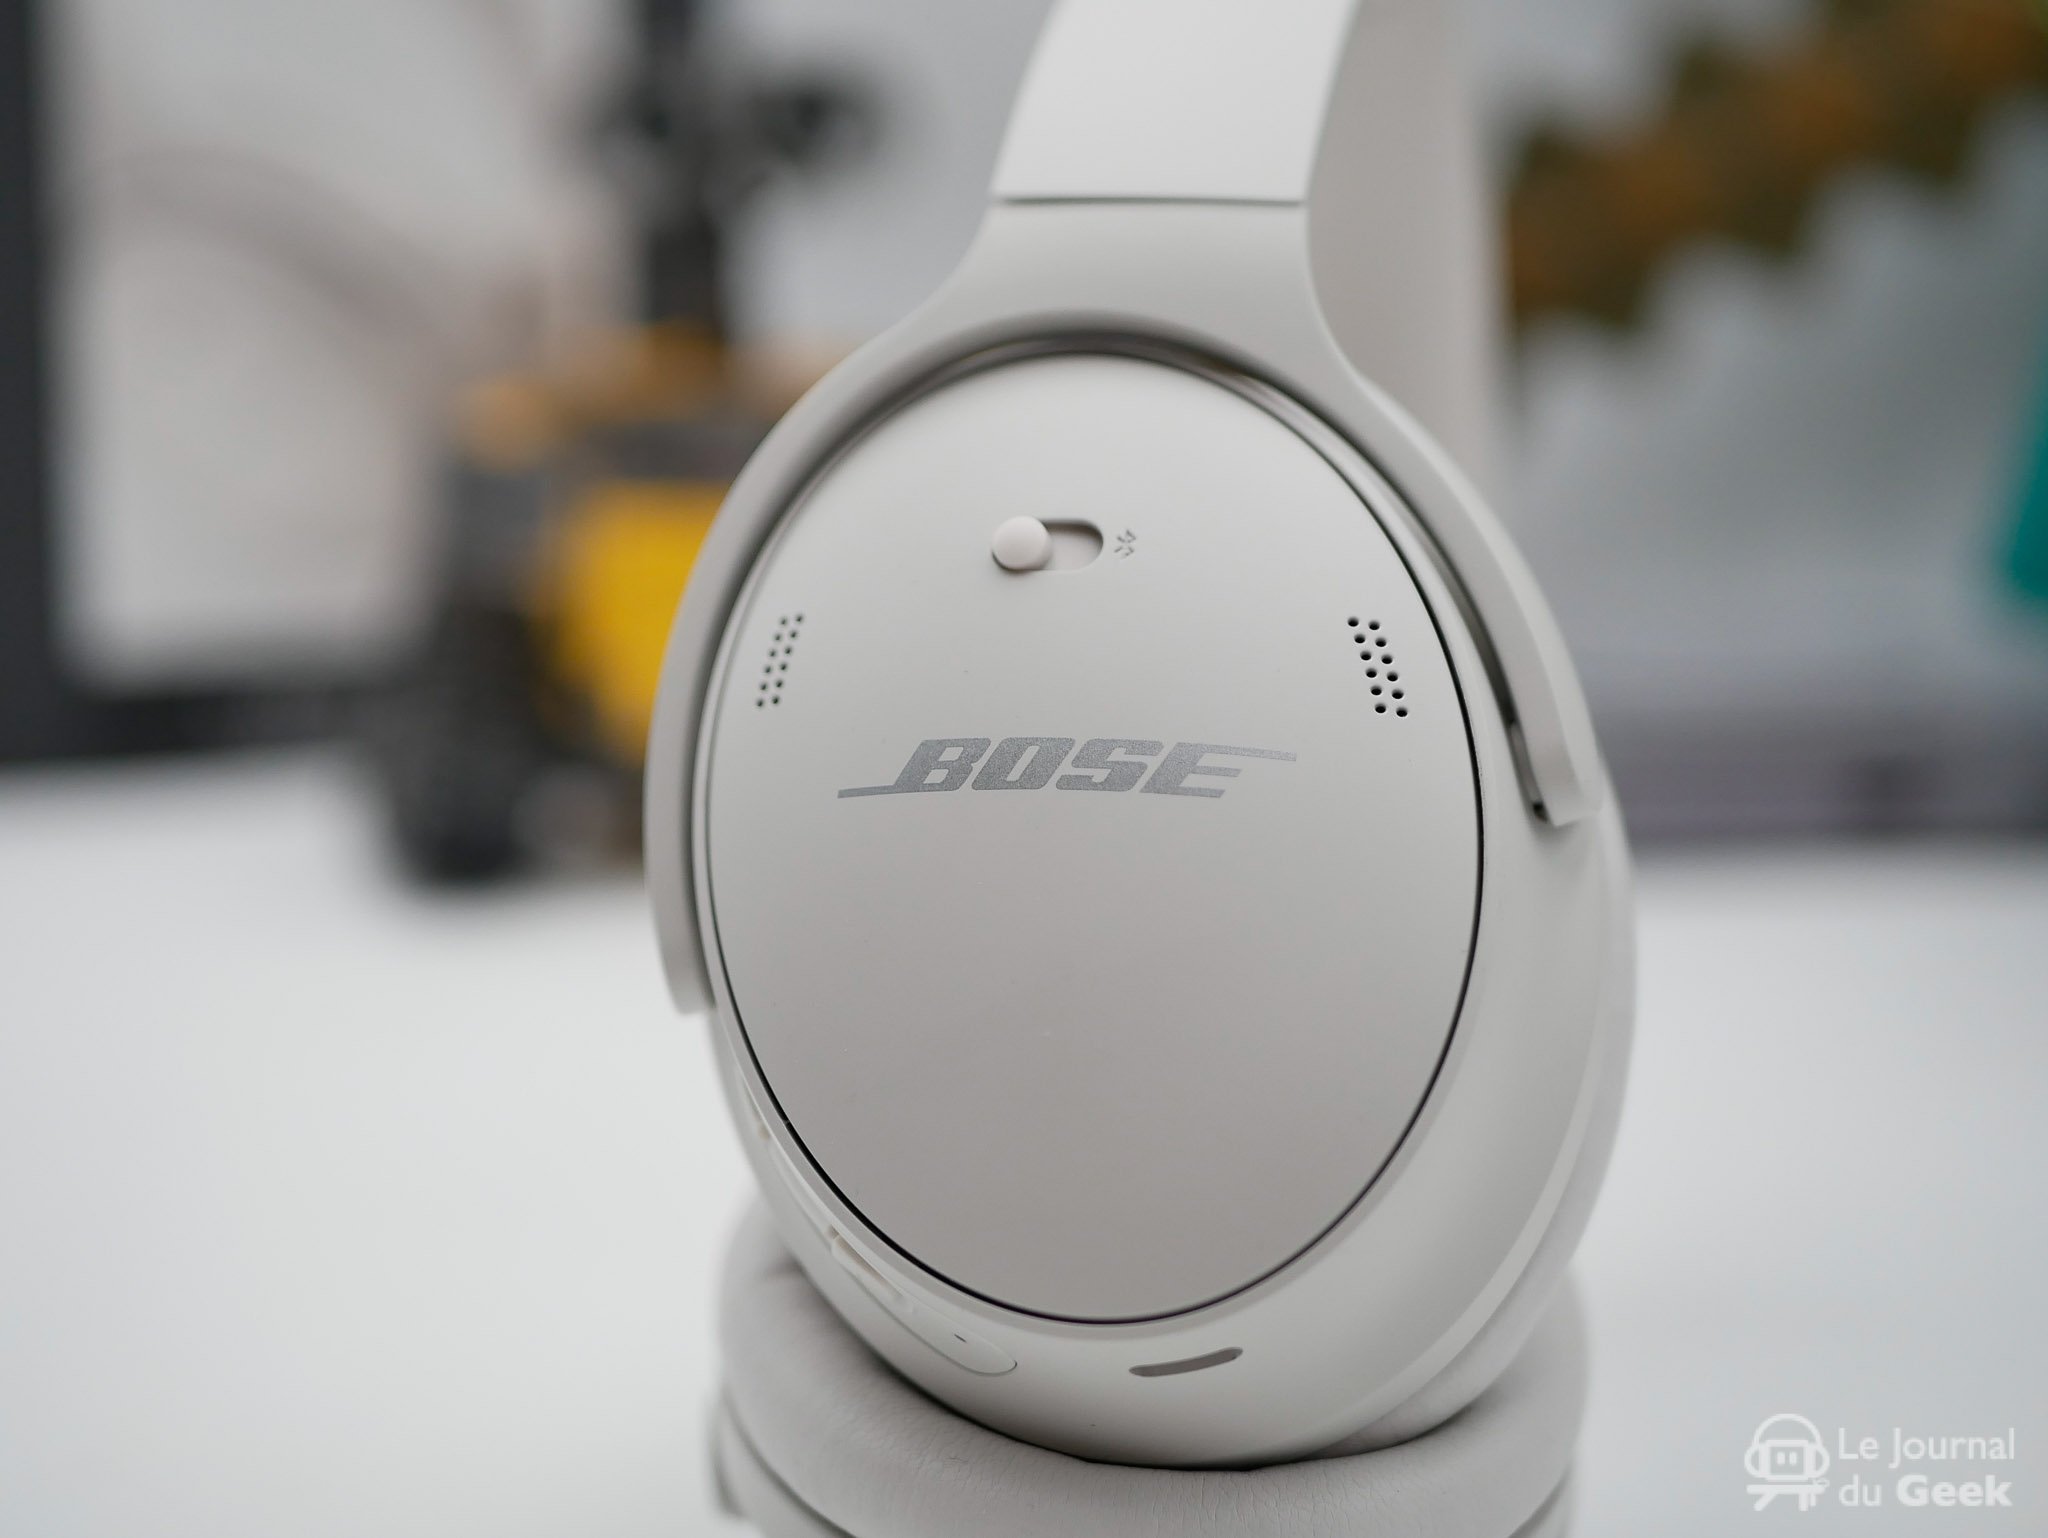 Bose QuietComfort 35 II - Test du casque audio et Avis complet